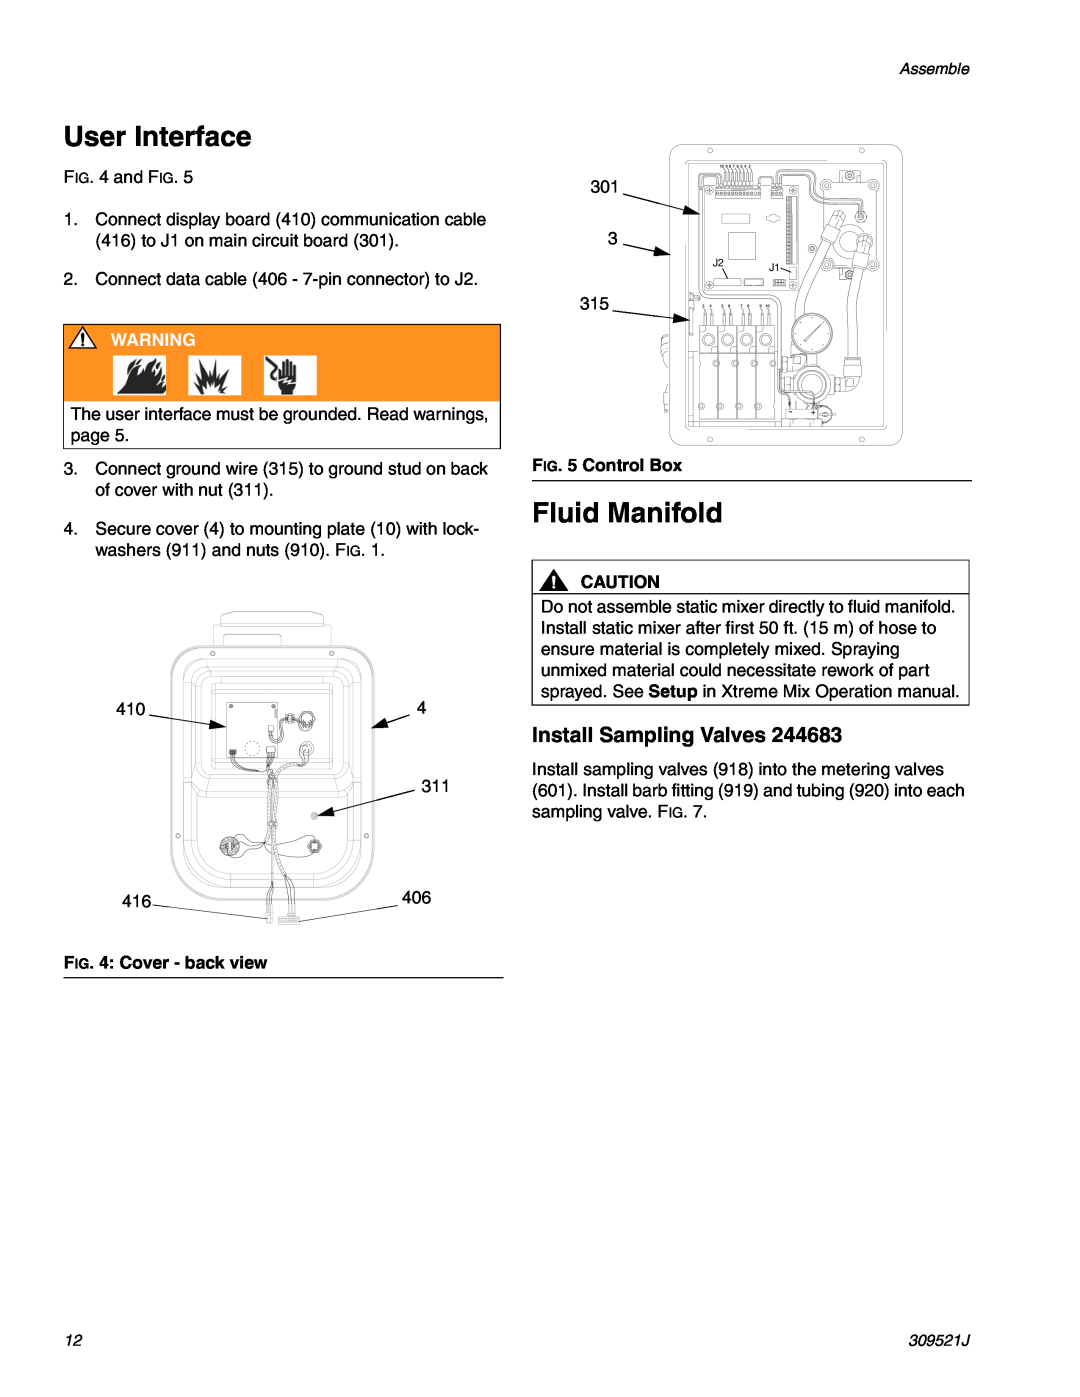 Hitachi 309521J User Interface, Fluid Manifold, Install Sampling Valves, Cover - back view, Control Box 